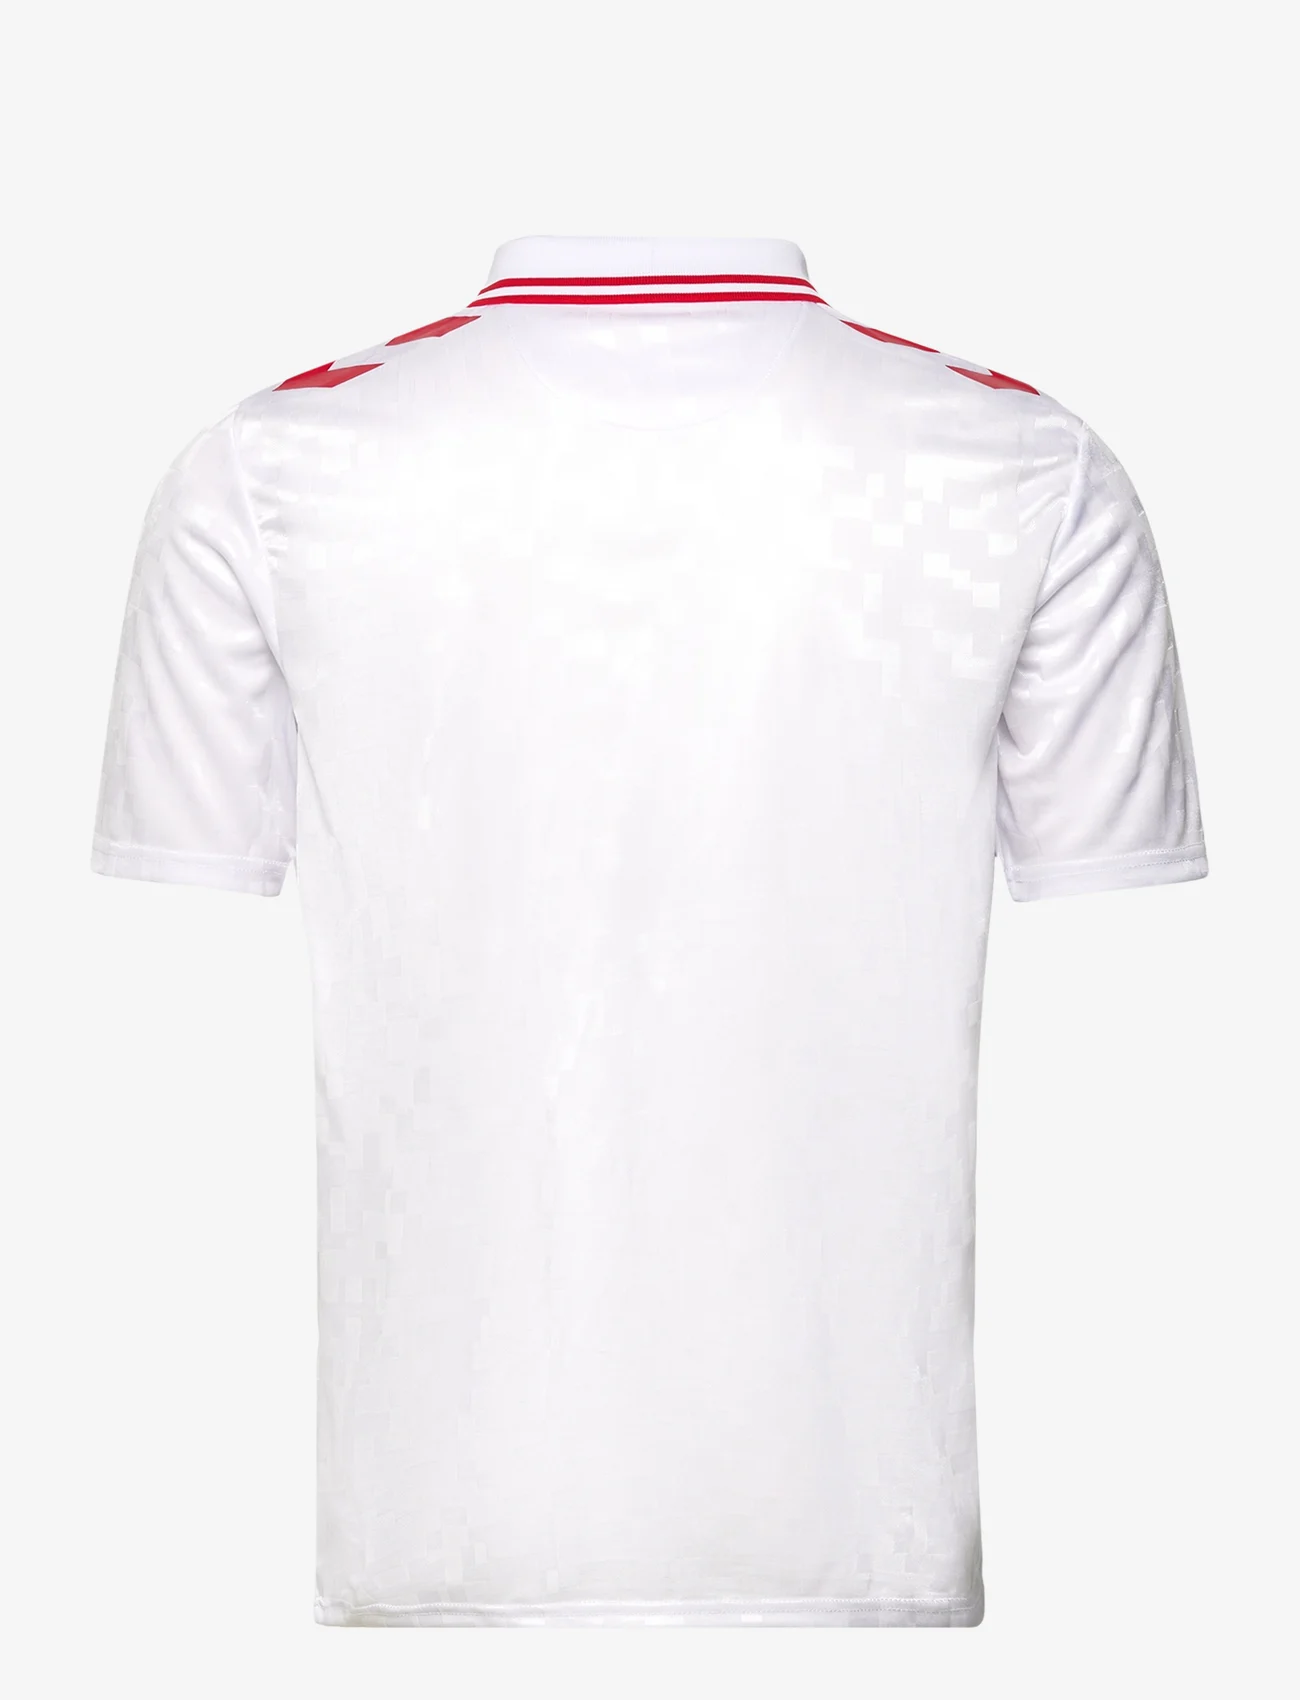 Hummel - DBU 24 AWAY JERSEY S/S - futbolo marškinėliai - white - 1